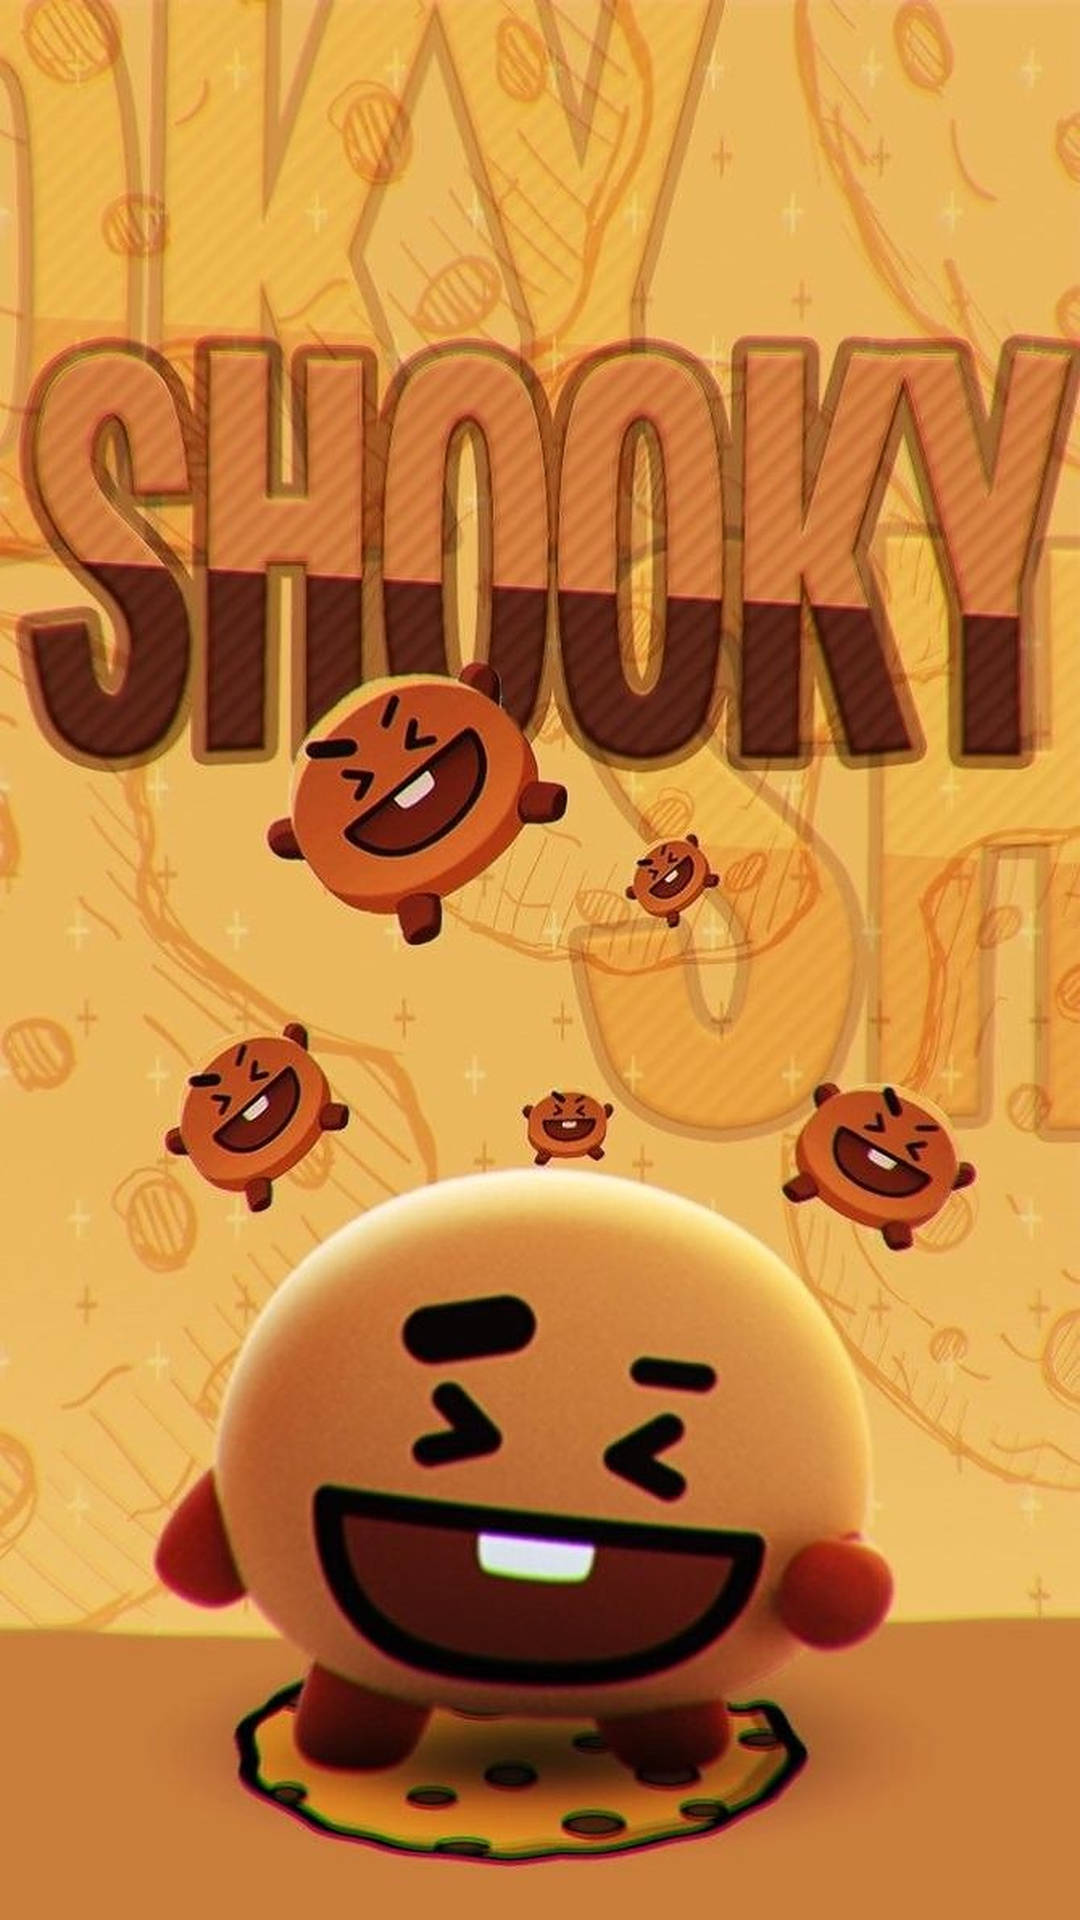 Shooky Bt21 Poster